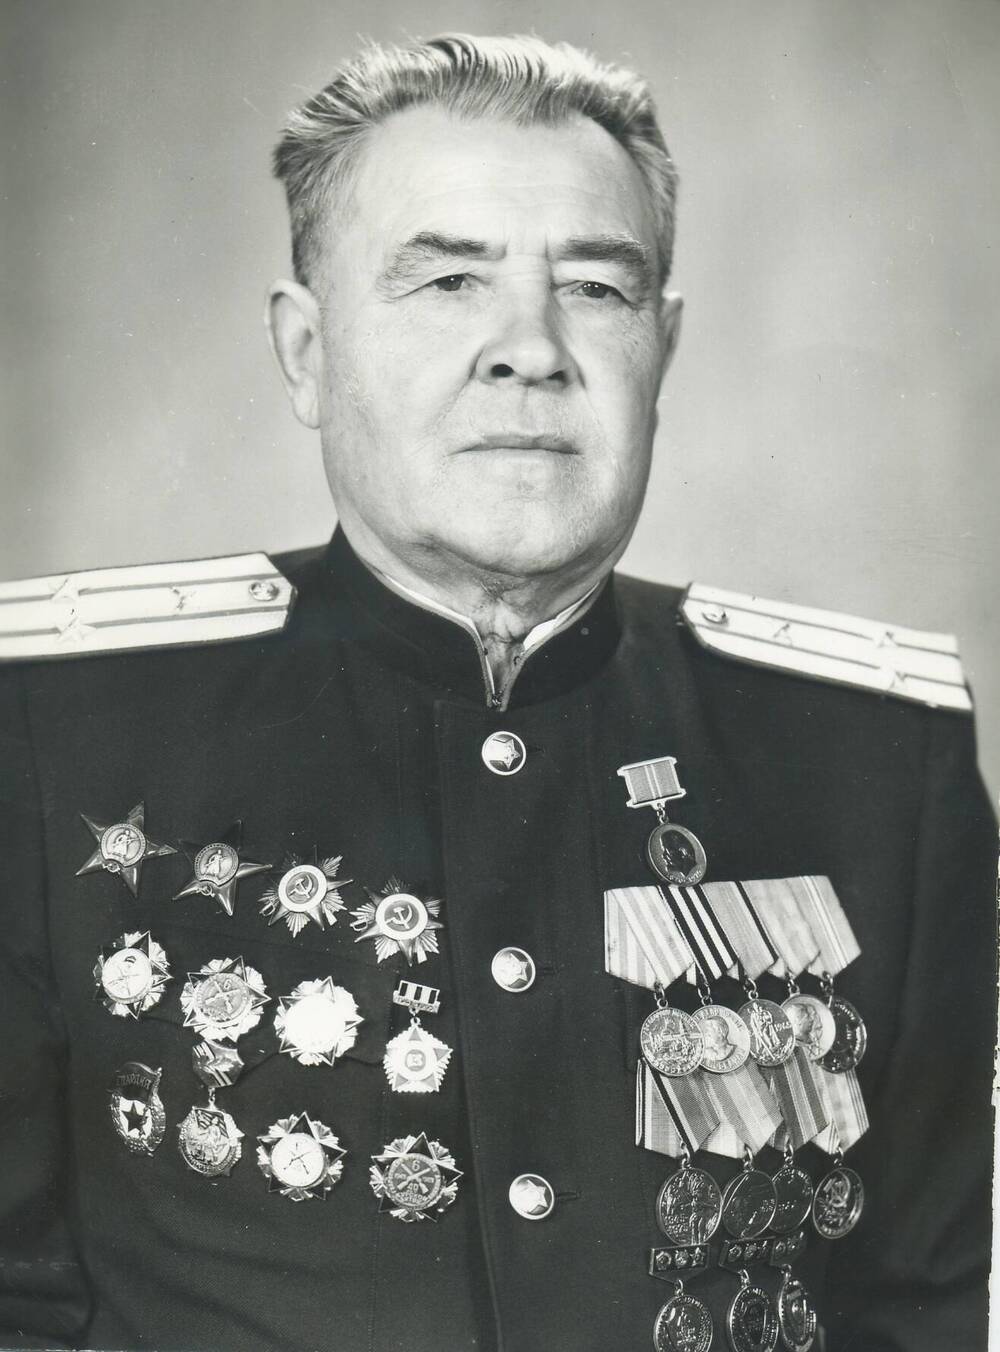 Фото: Пятковский Андрей Кириллович – участник Курской битвы в составе 6 гвардейской дивизии 17 гвардейского стрелкового корпуса.